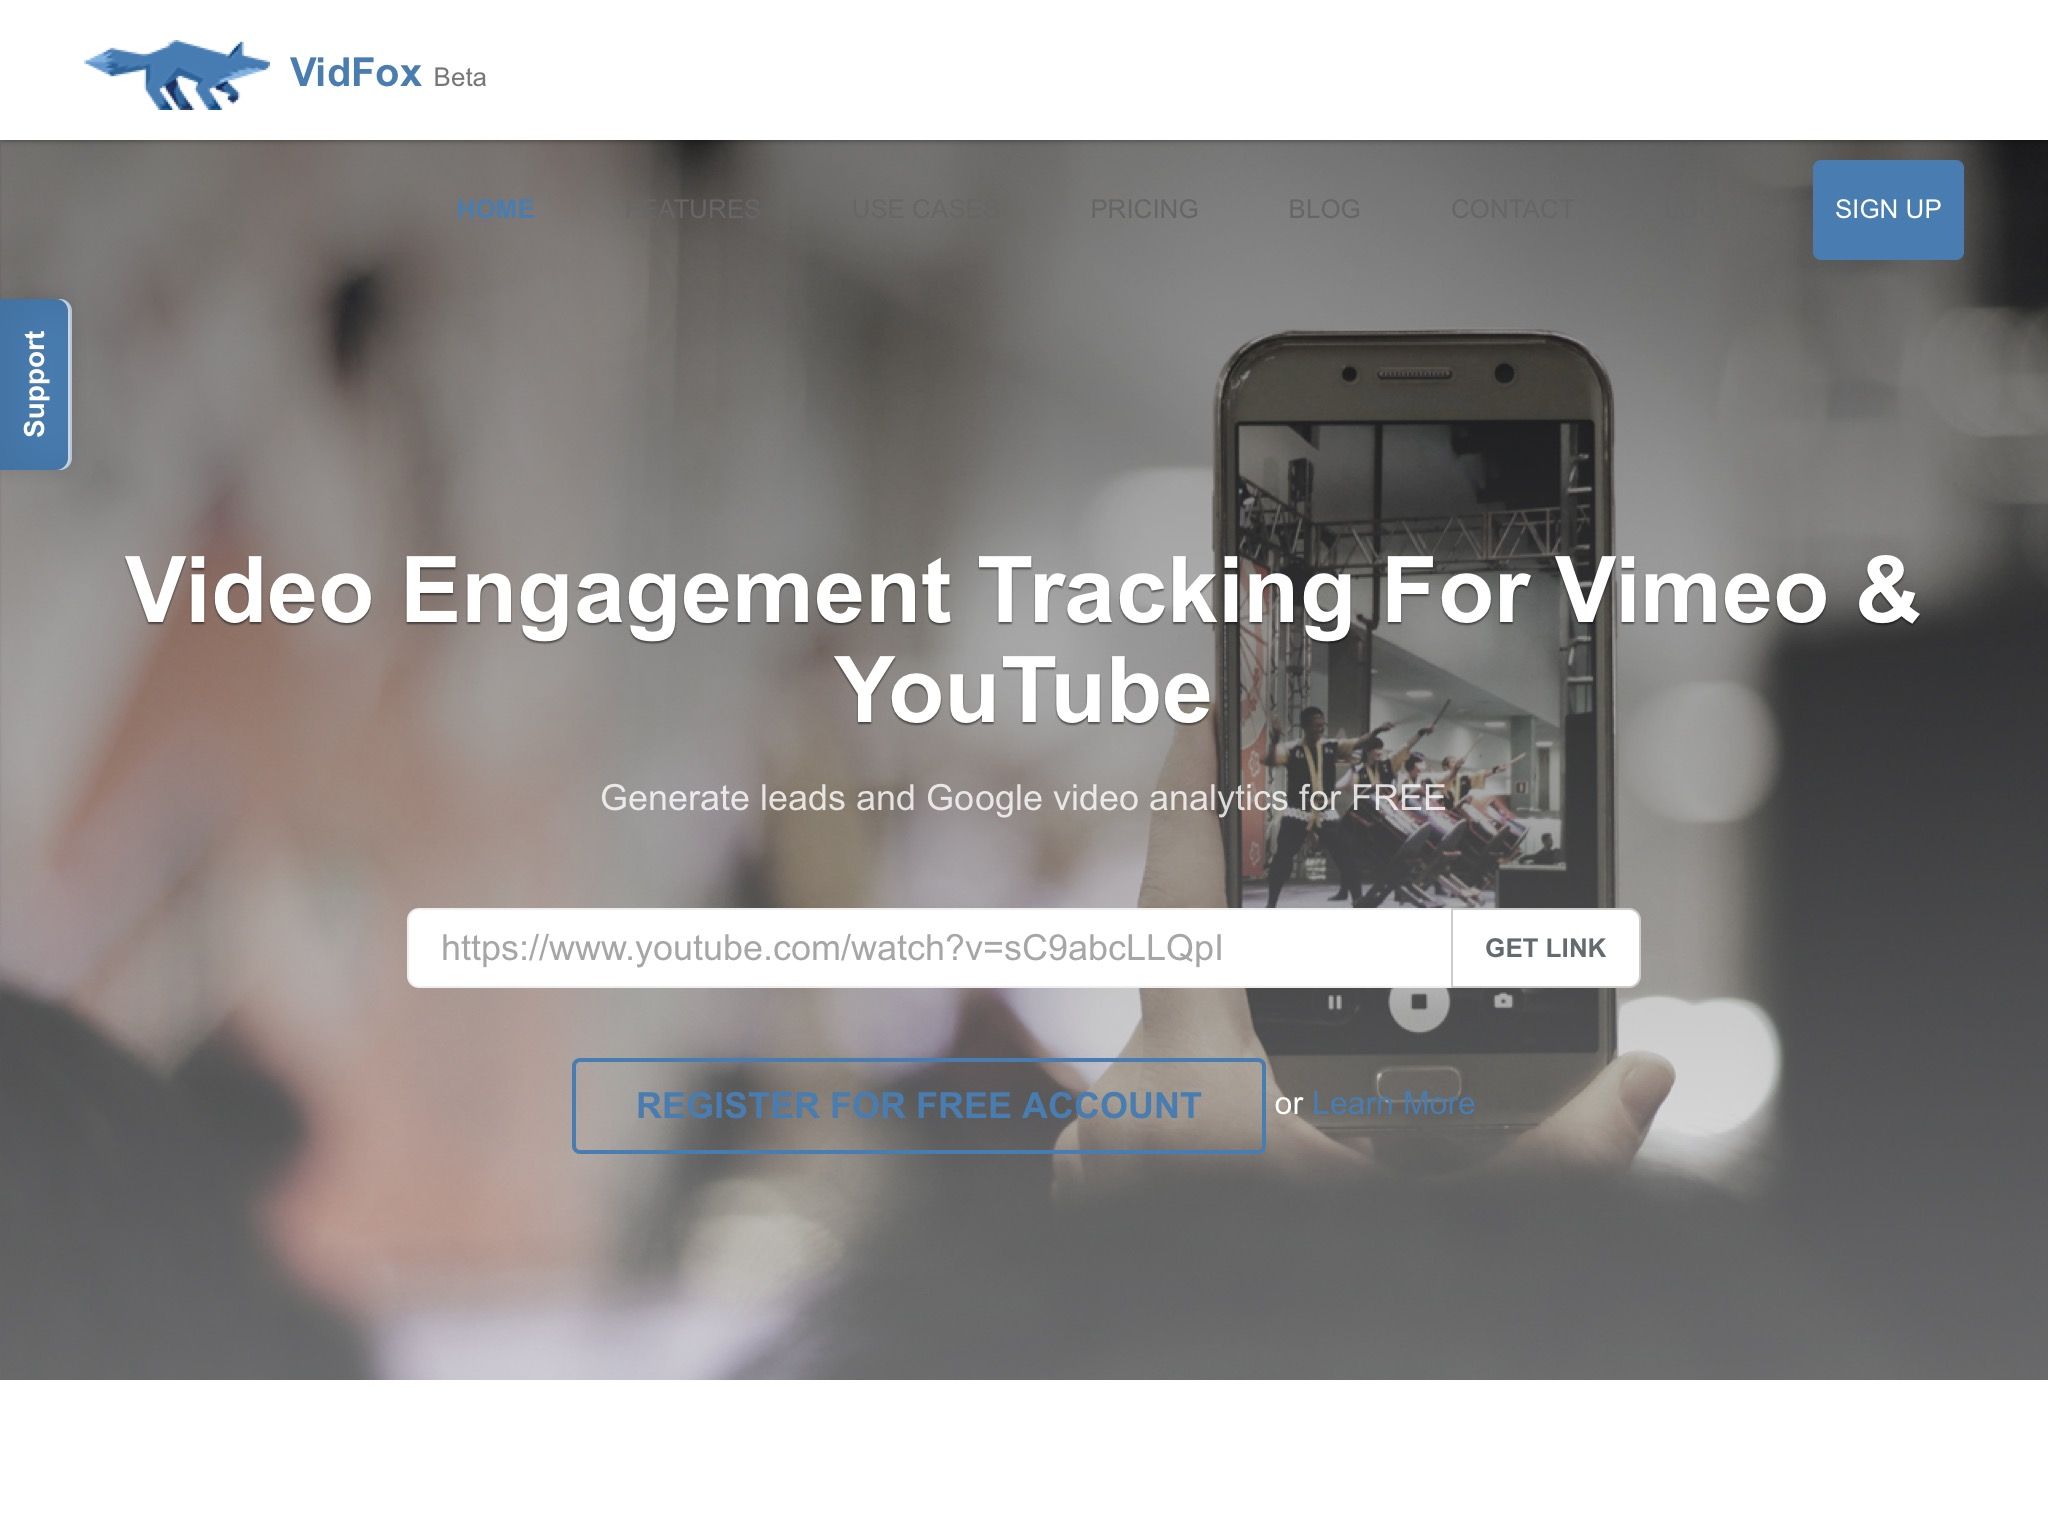 Vidgoxxx - VidFox: Video engagement tracking for Vimeo & YouTube | BetaList